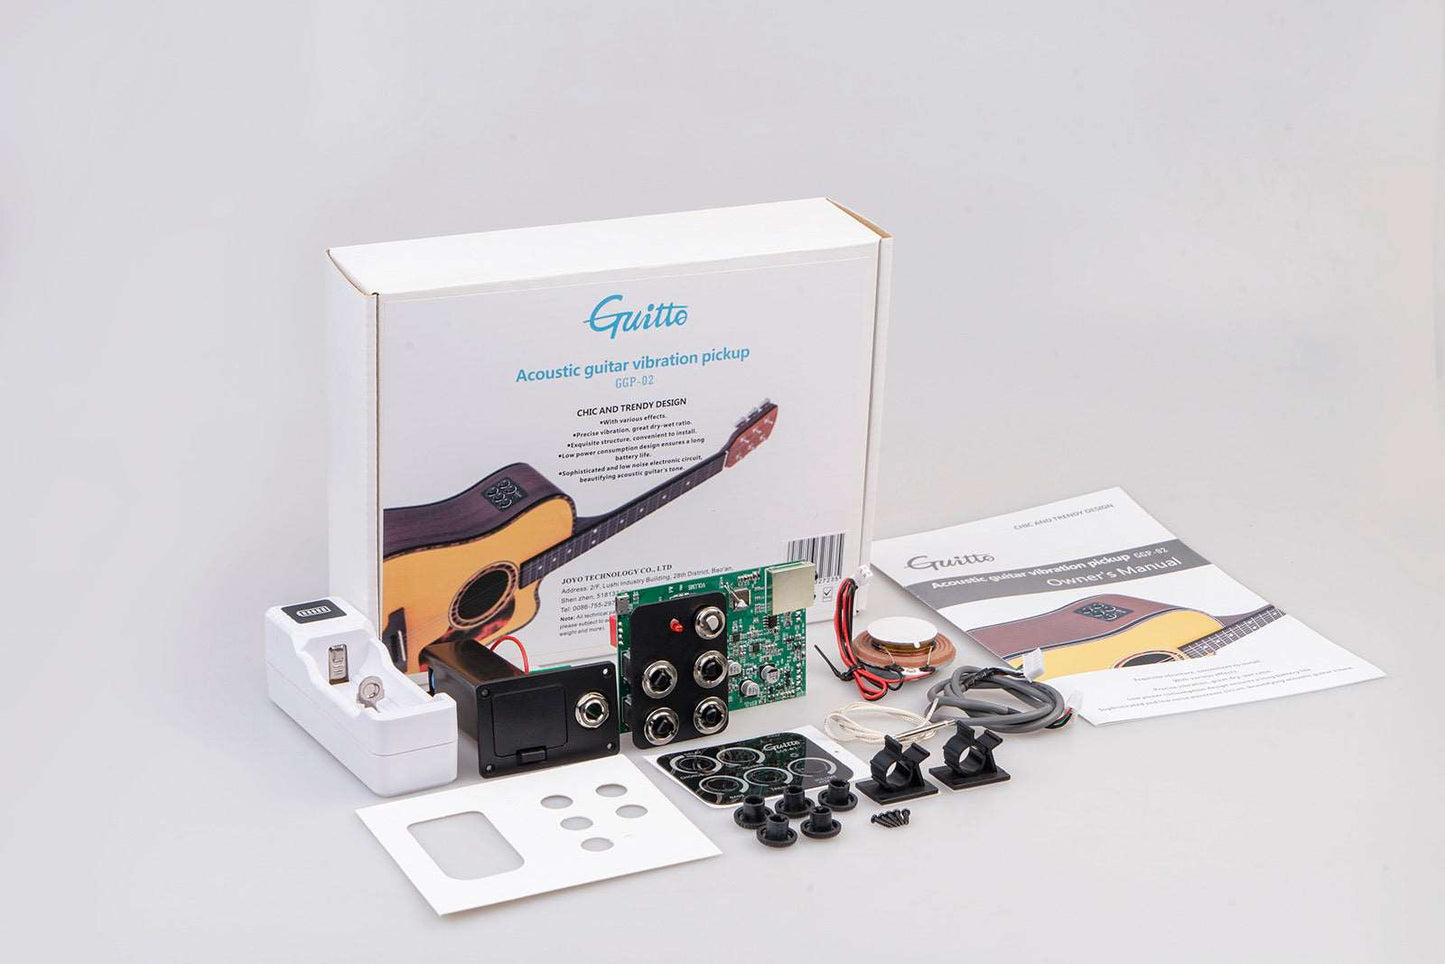 Acoustic guitar vibration pickup GGP-02 - Kalena